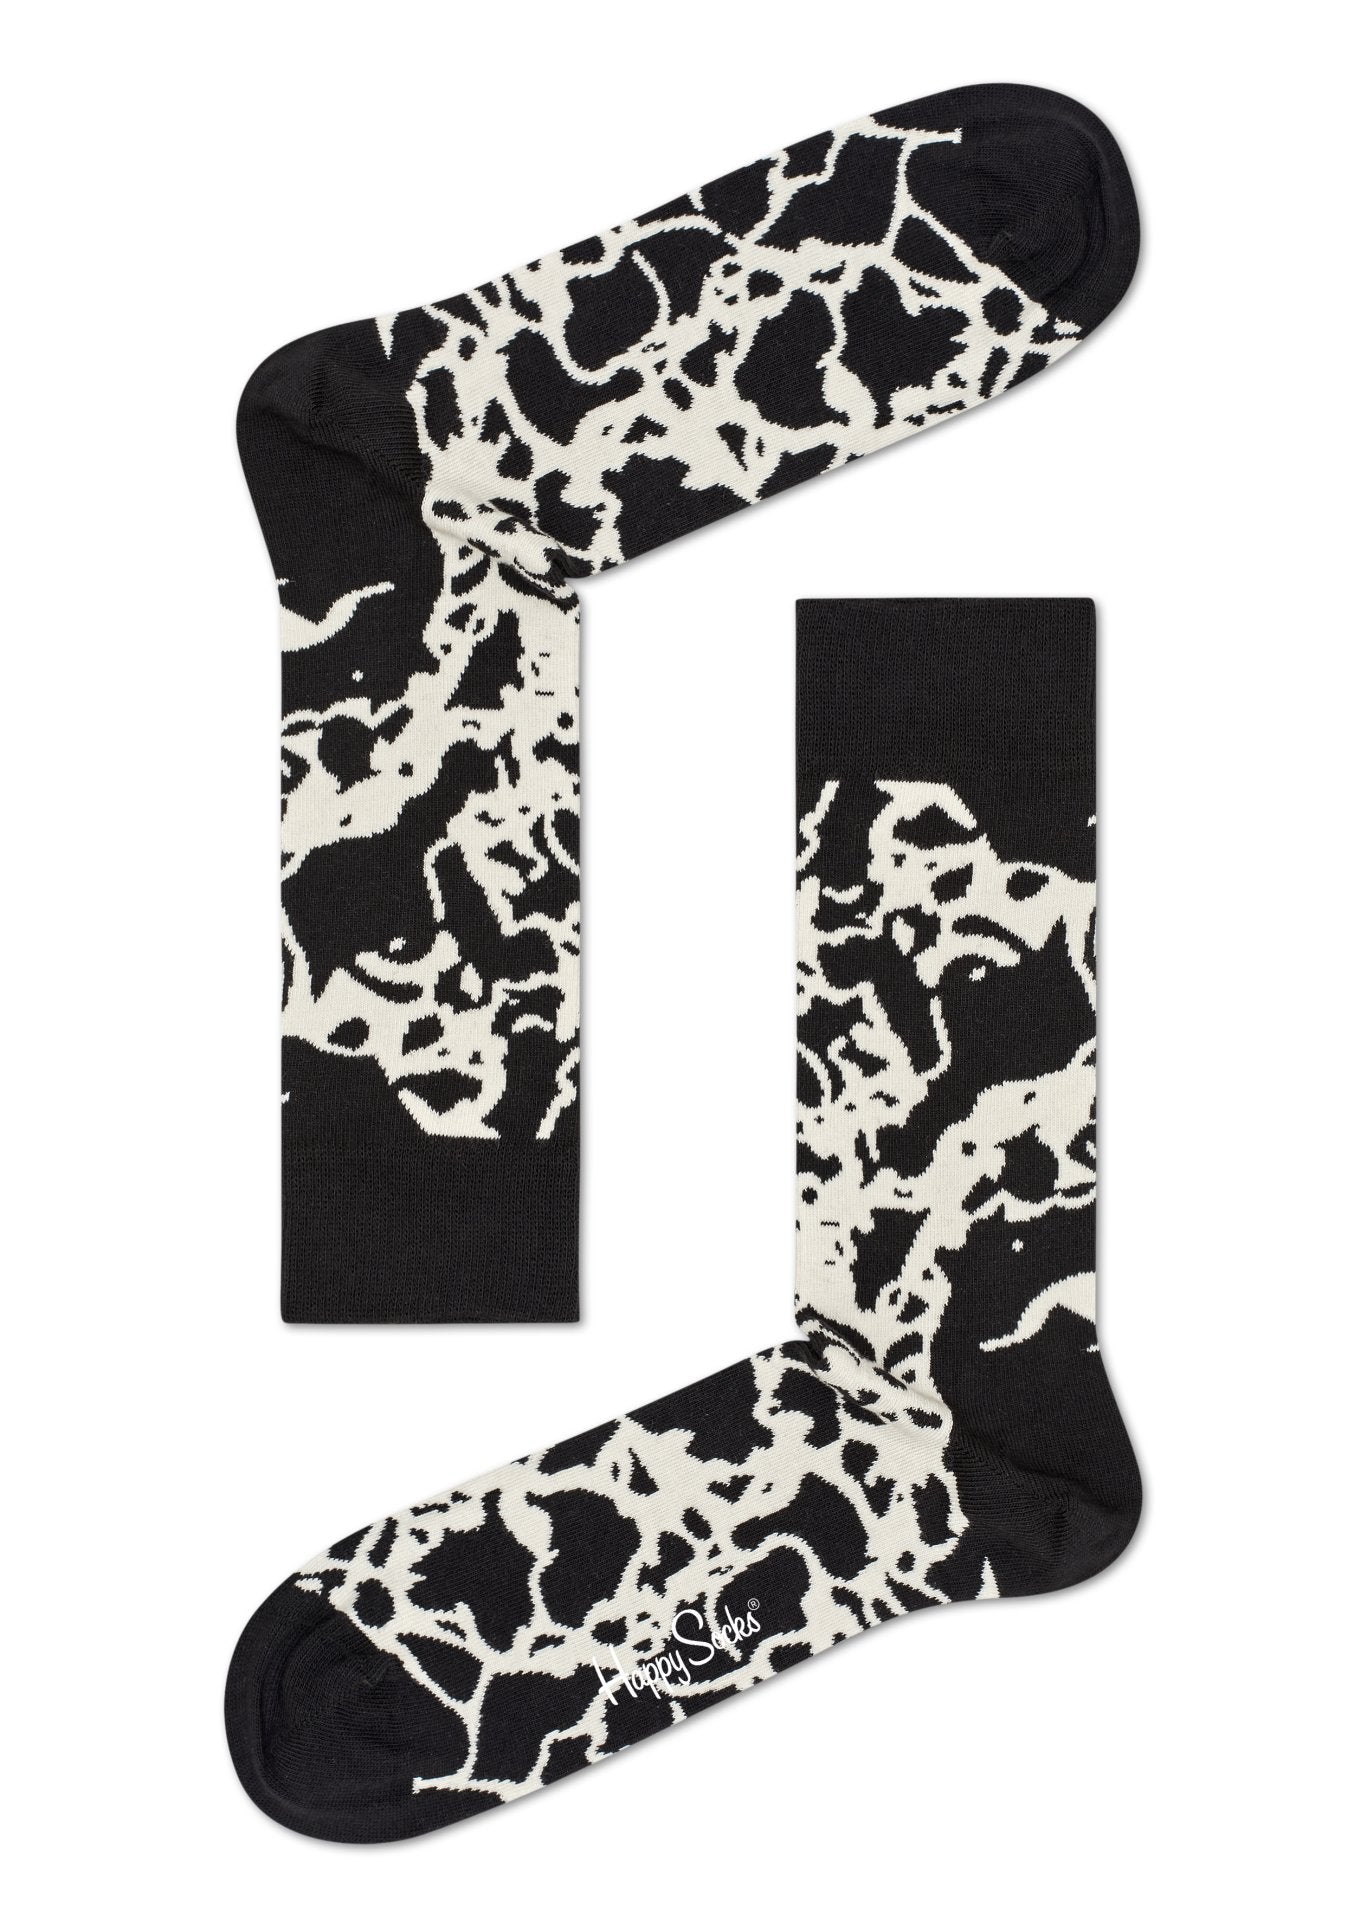 Černobílé ponožky Happy Socks s mramorovým vzorem Marble